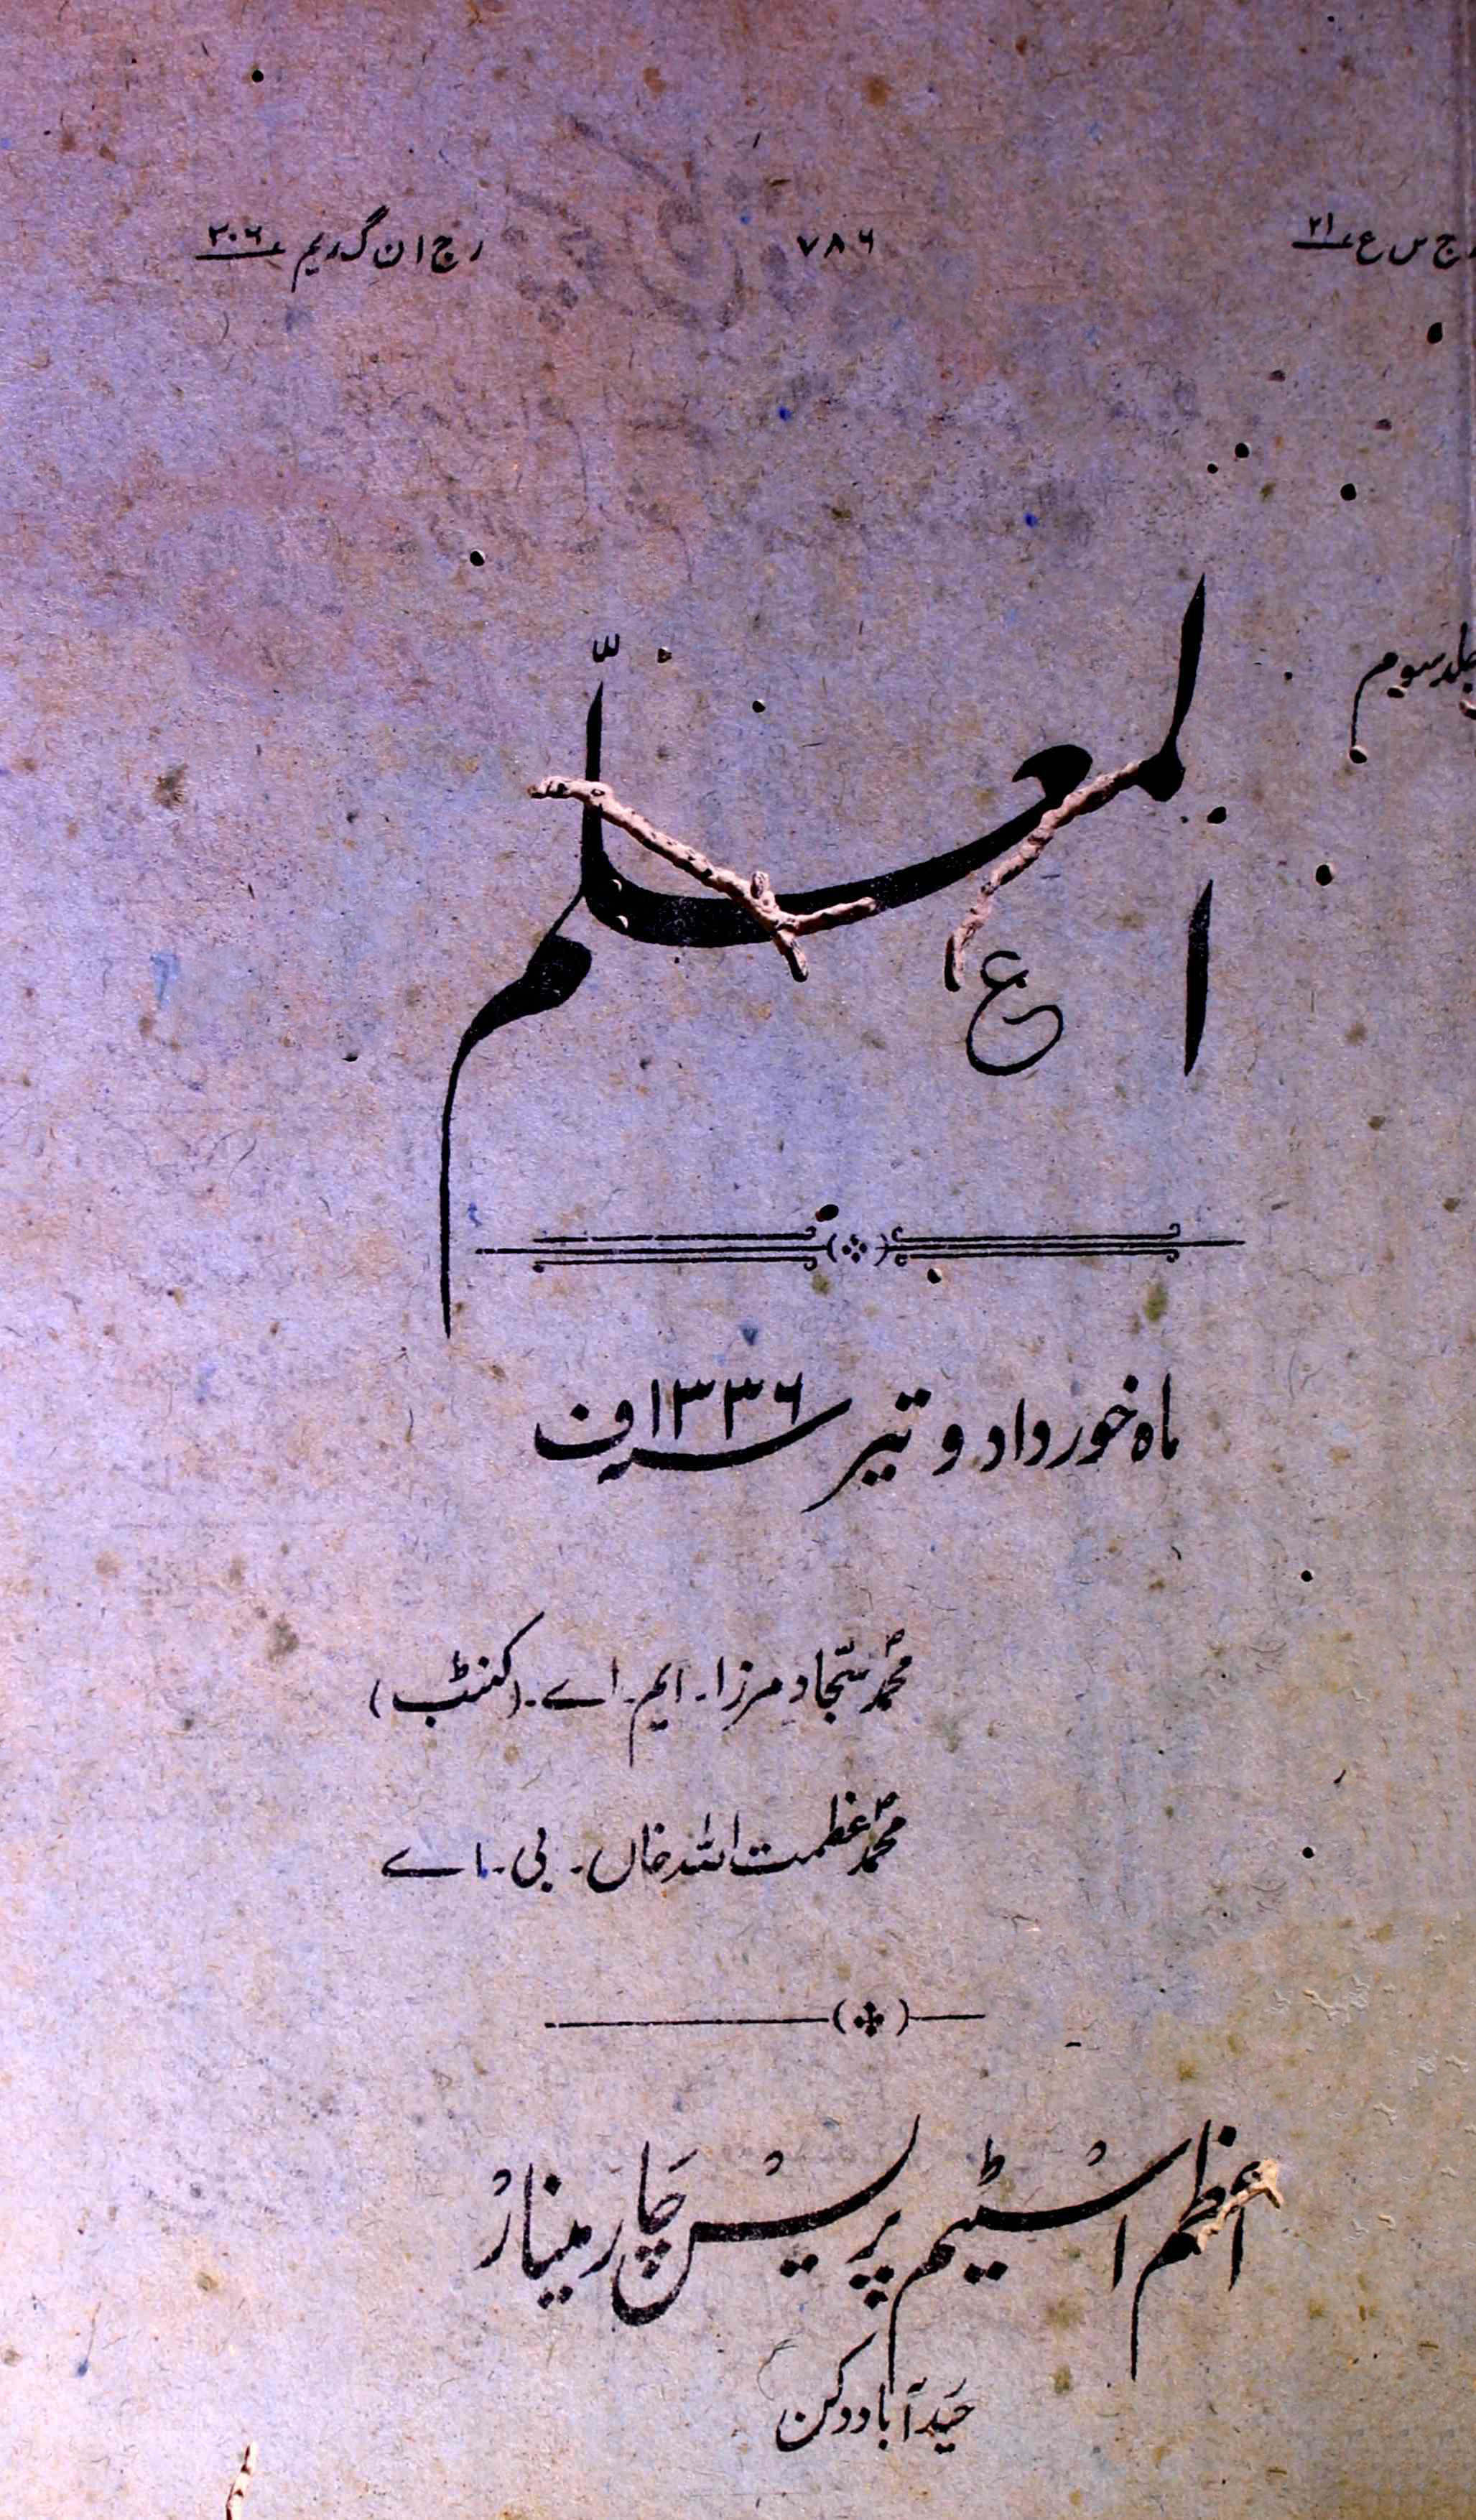 Al-Muallim Jild-3 No.10-11 Khordad, Tir - Hyd-Shumara Number-010, 011